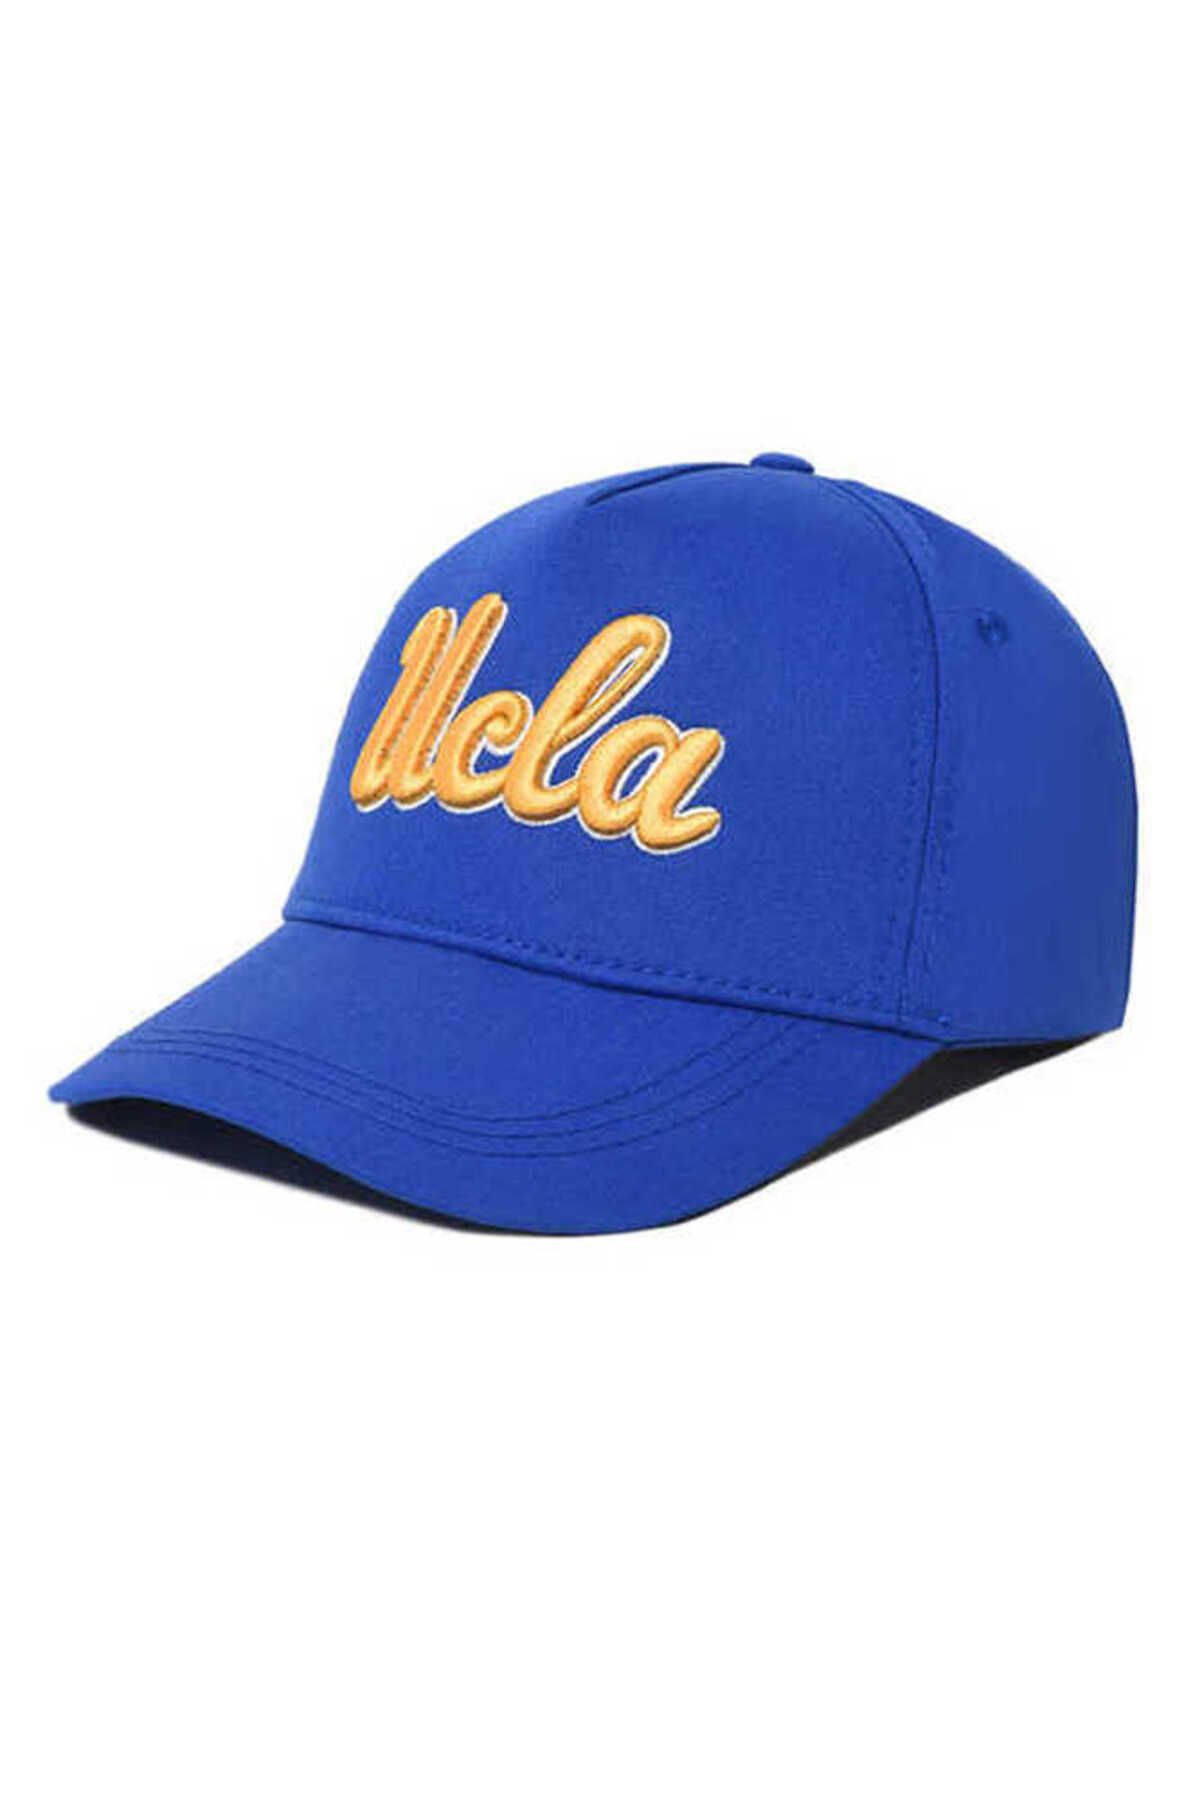 Ucla New Murphy Mavi Baseball Cap Şapka